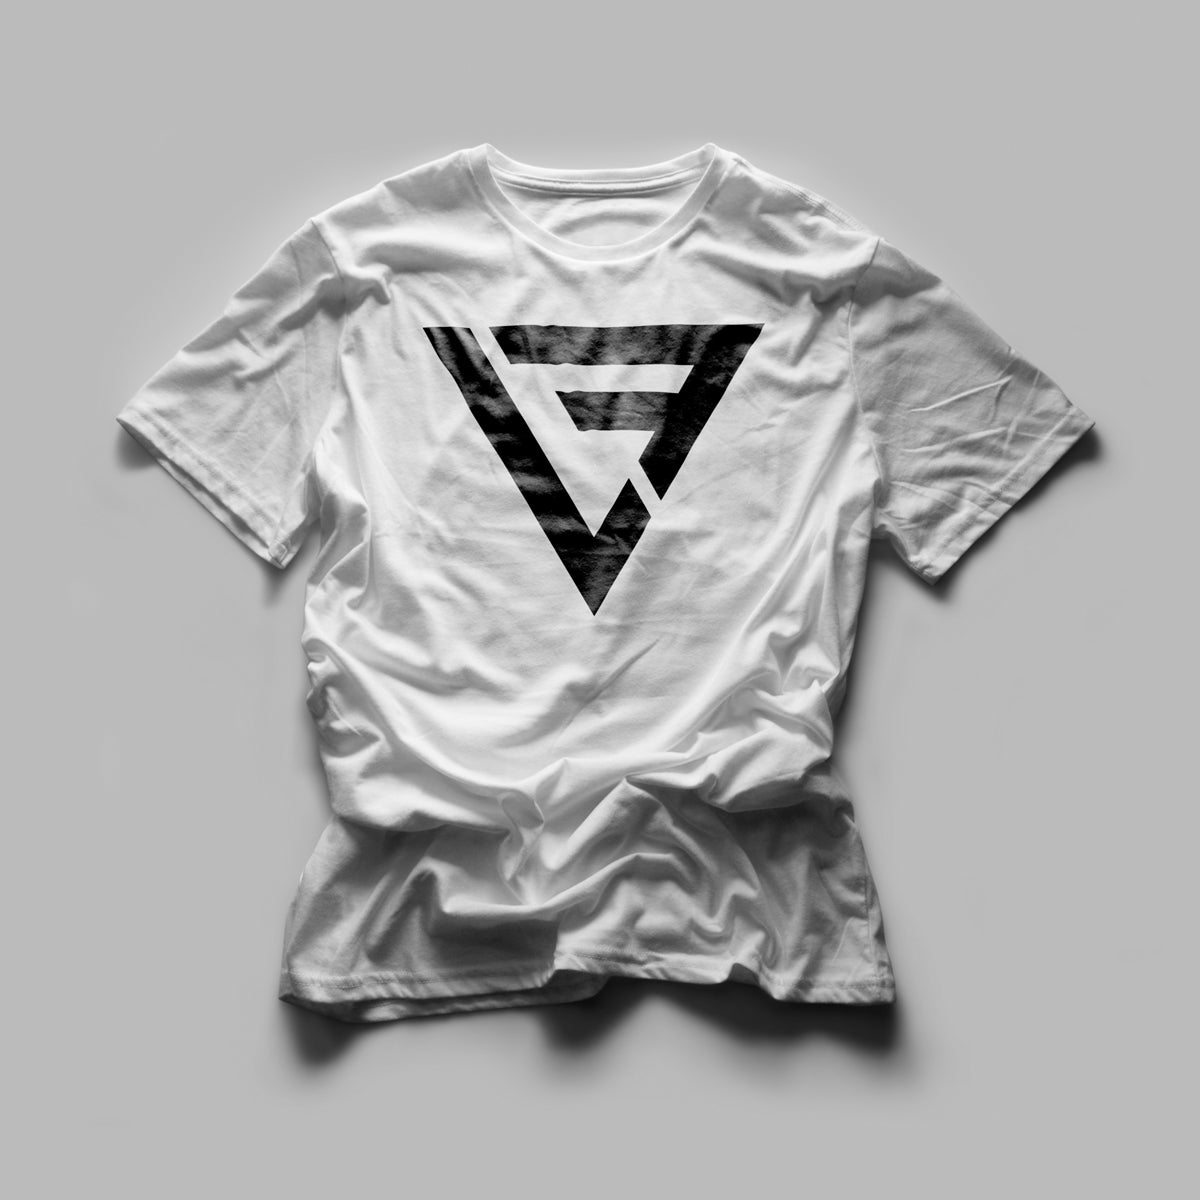 LinezFadeD - Black and White Premium Crew T-shirt